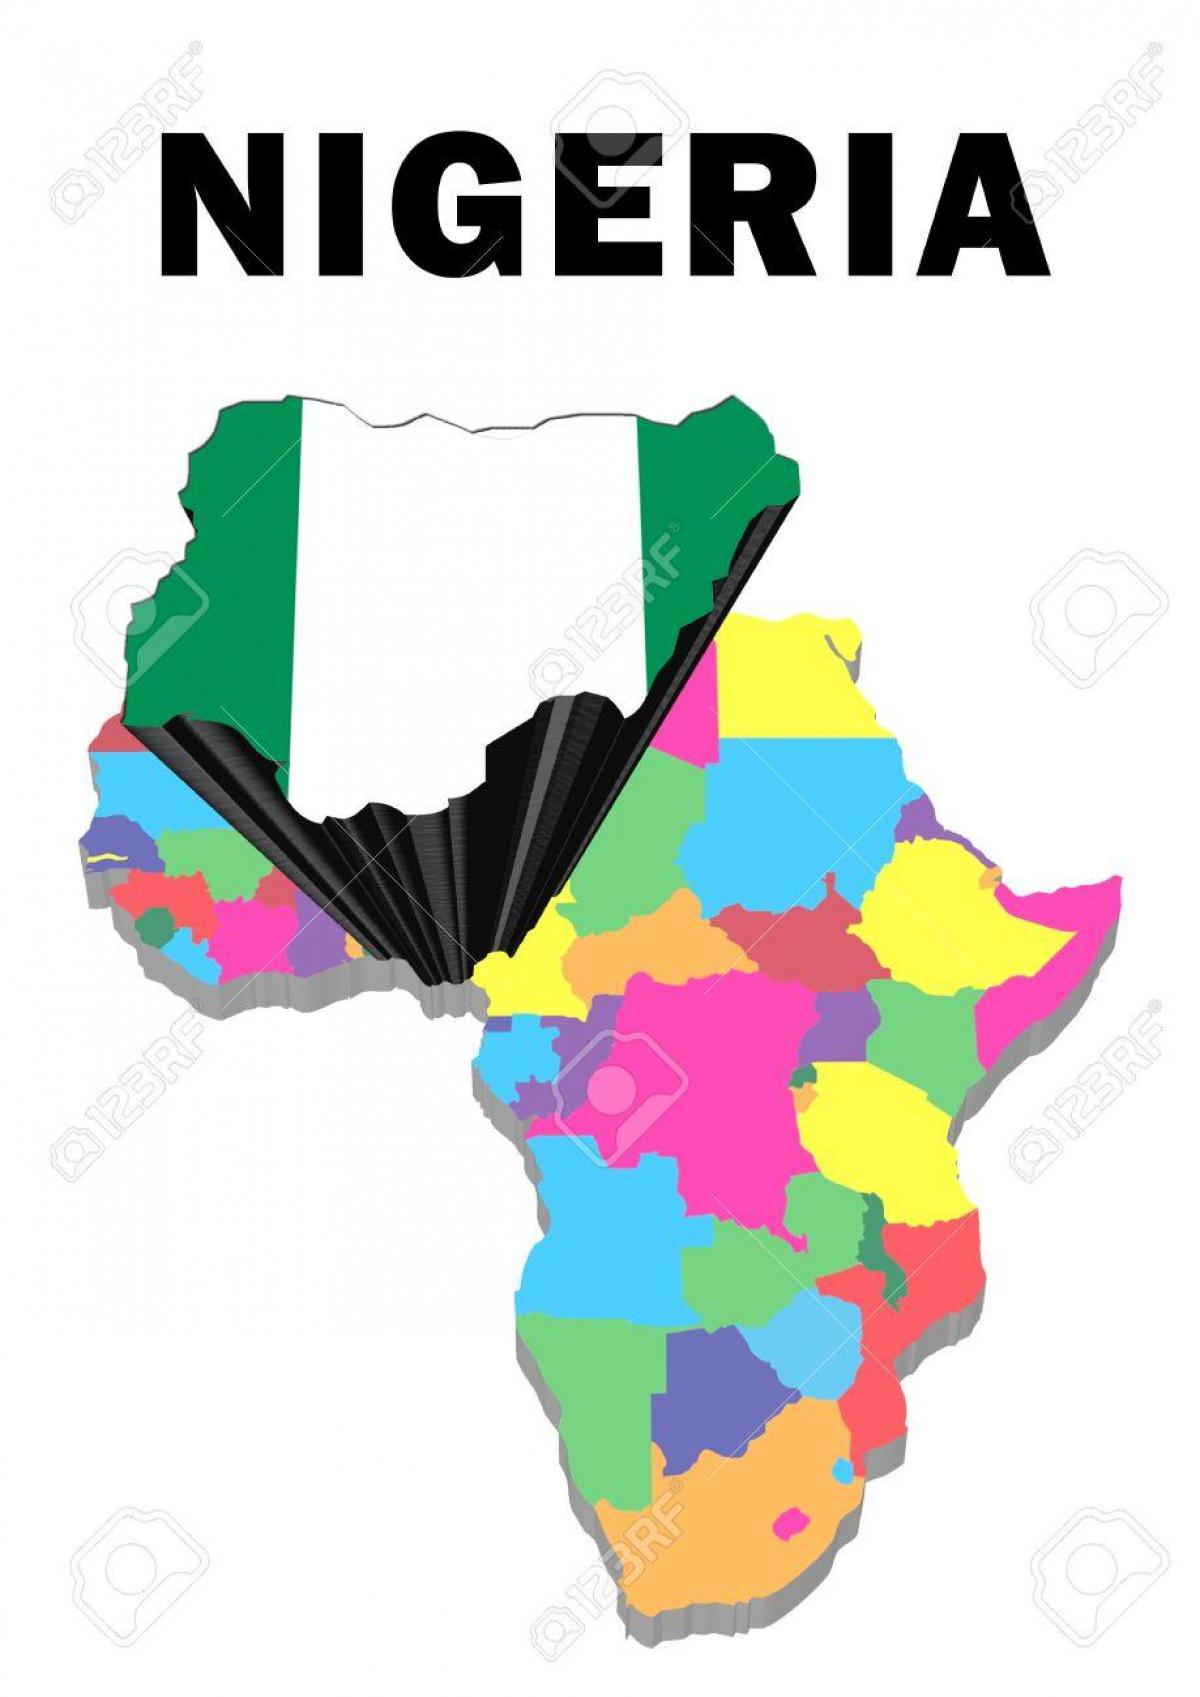 mapa de áfrica con nixeria destacadas